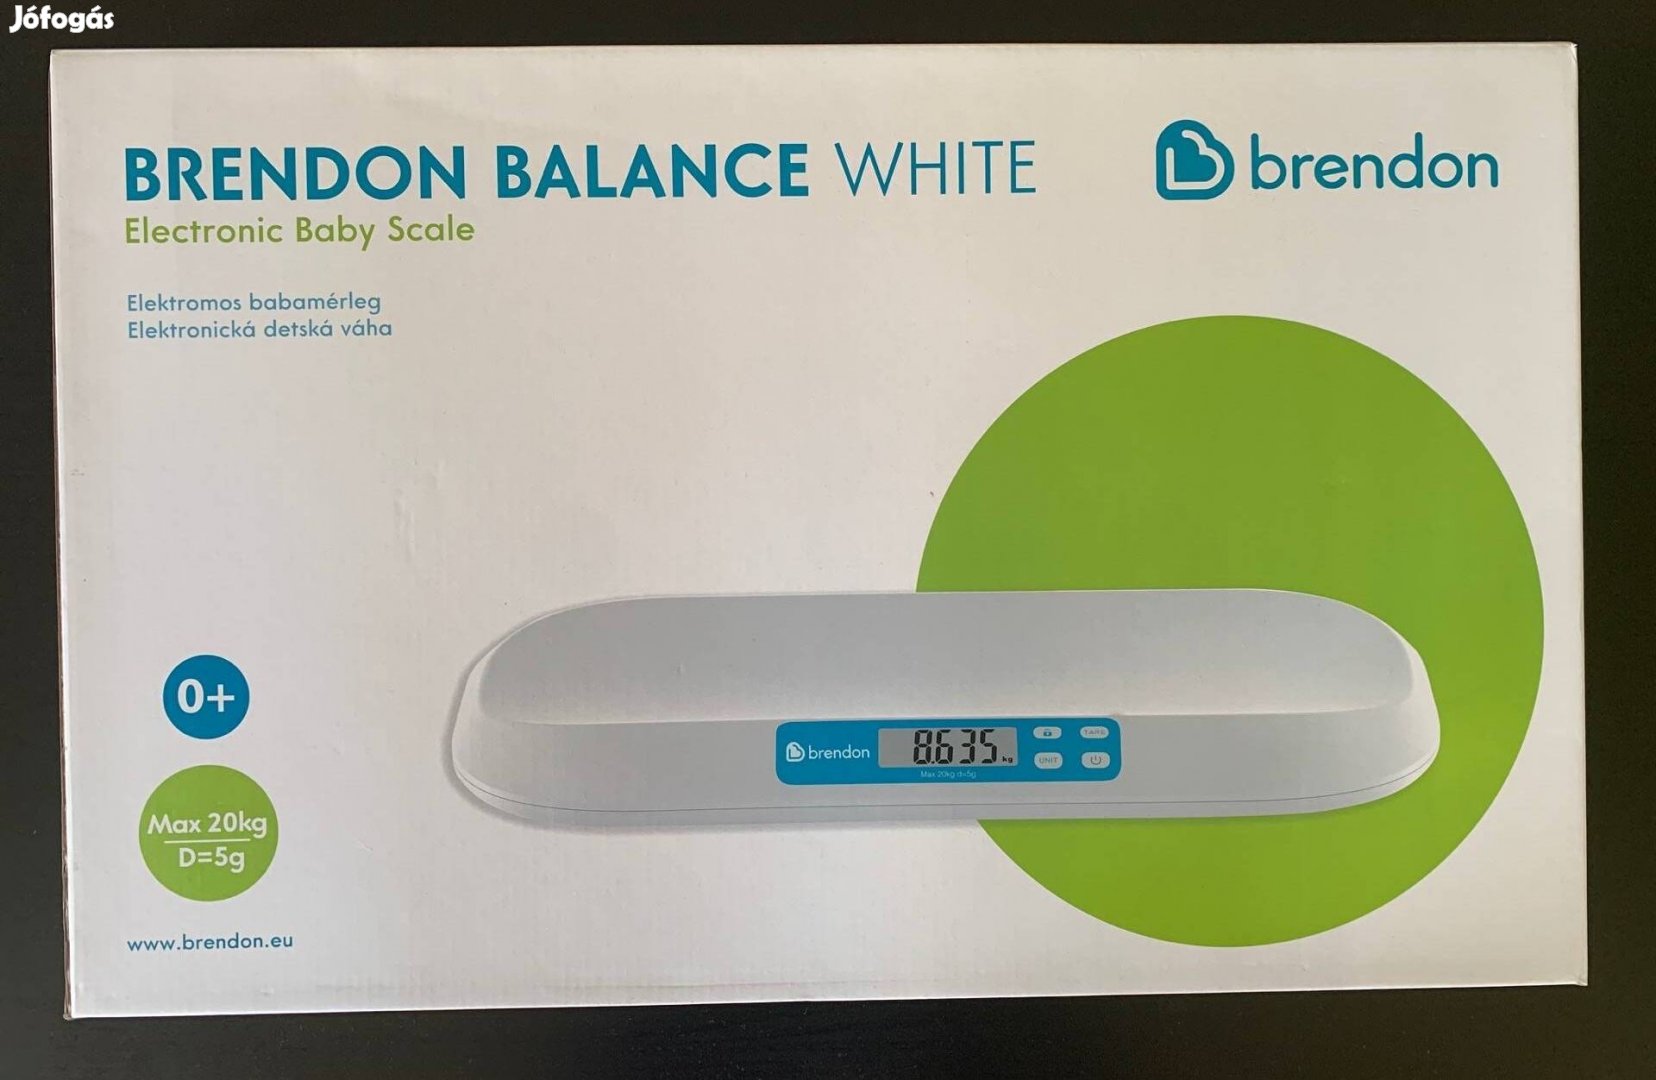 Brendon Balance White babamérleg